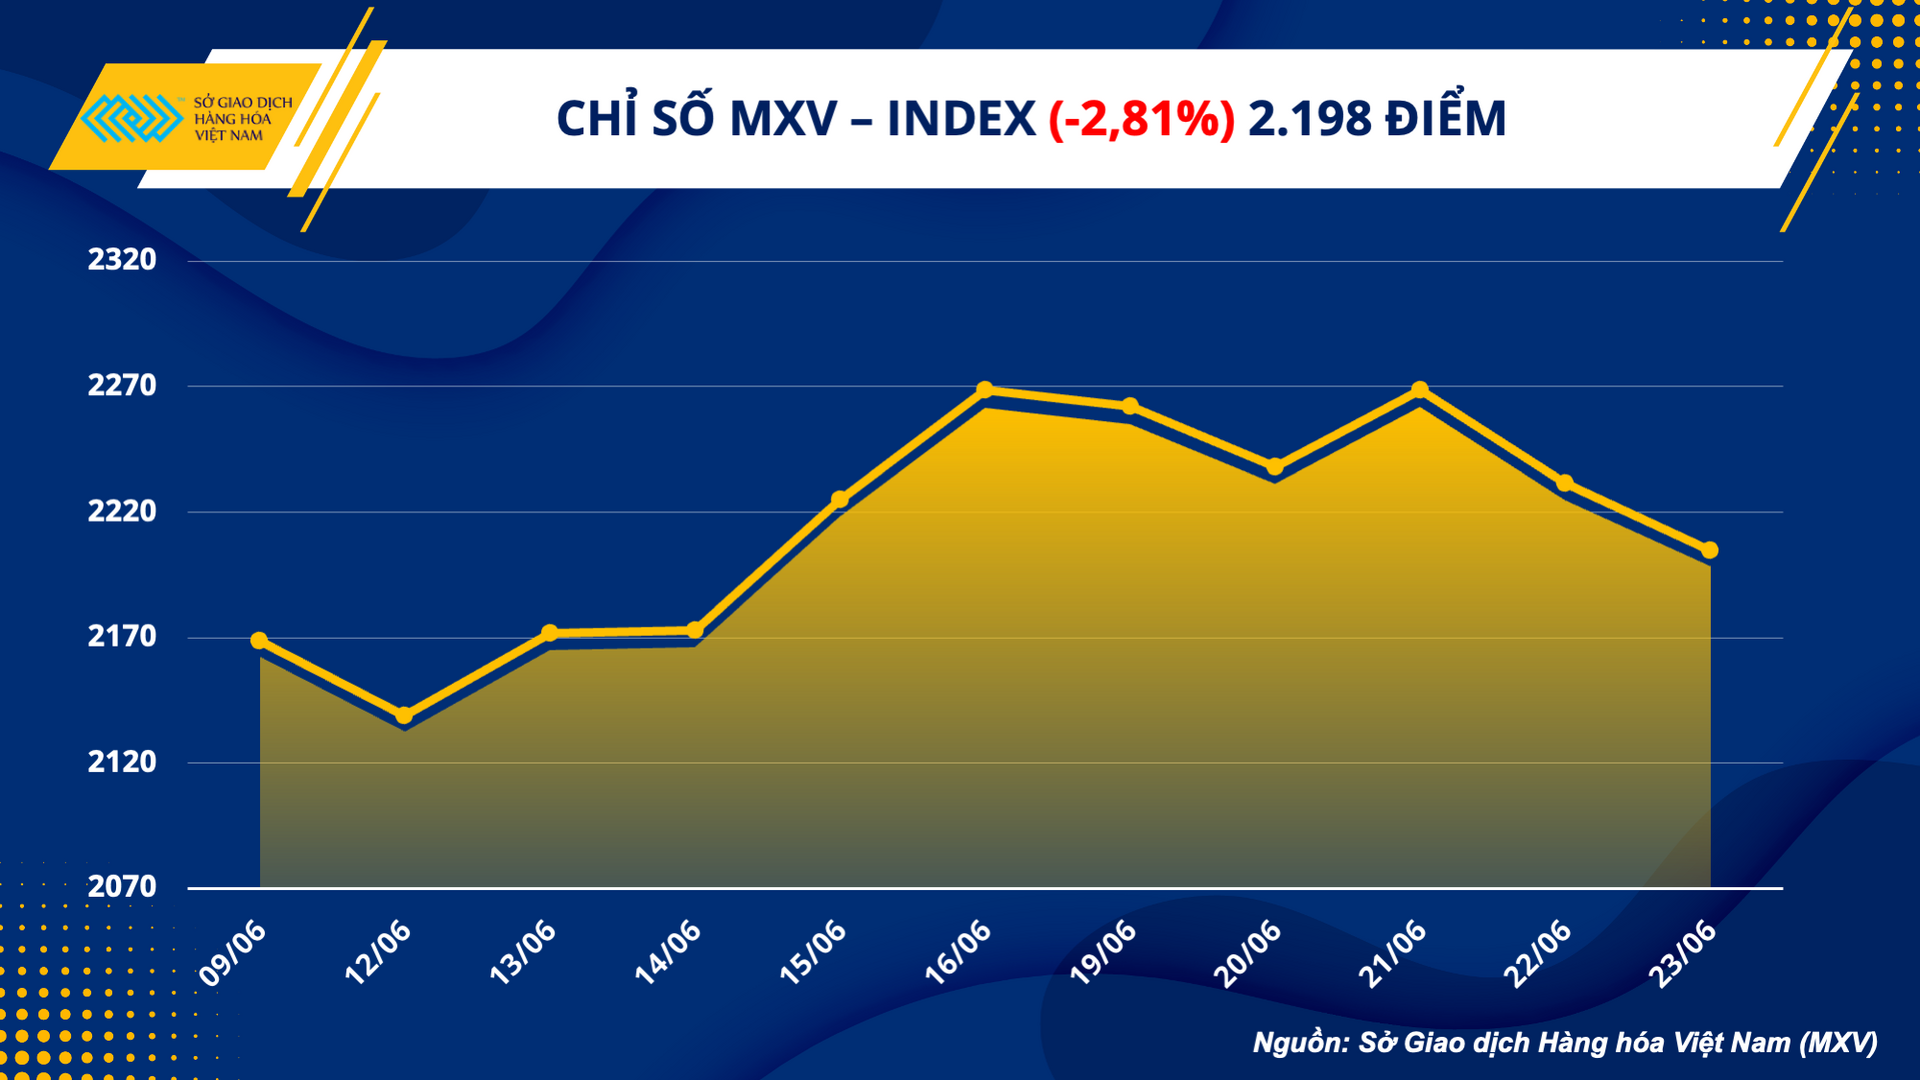 1. mxv - index (20)